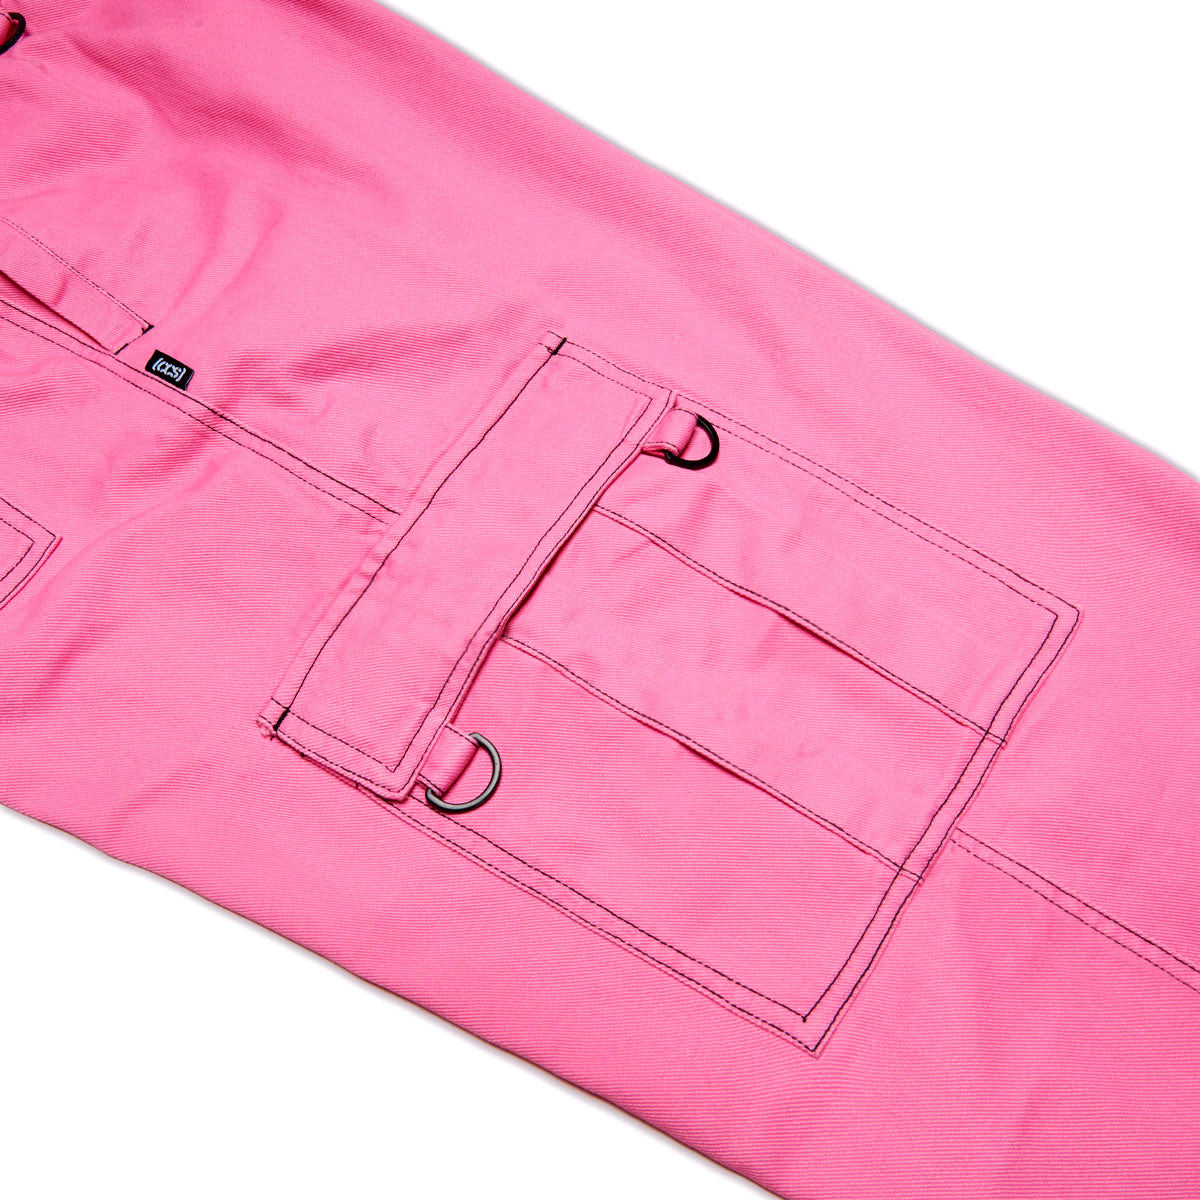 CCS Titus Twill Cargo Pants - Pink/Black image 8